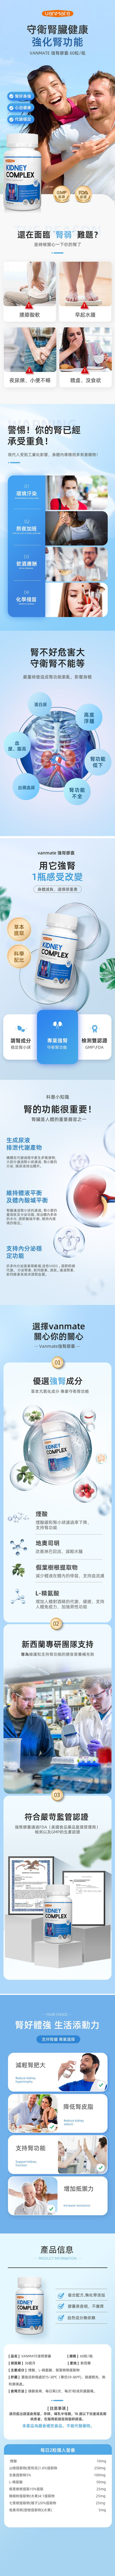 Vanmate 複合陽腎（60粒） 支援溫腎助陽/增強體能 補充劑 FDA & GMP 認證 9421906722017 Vanmate